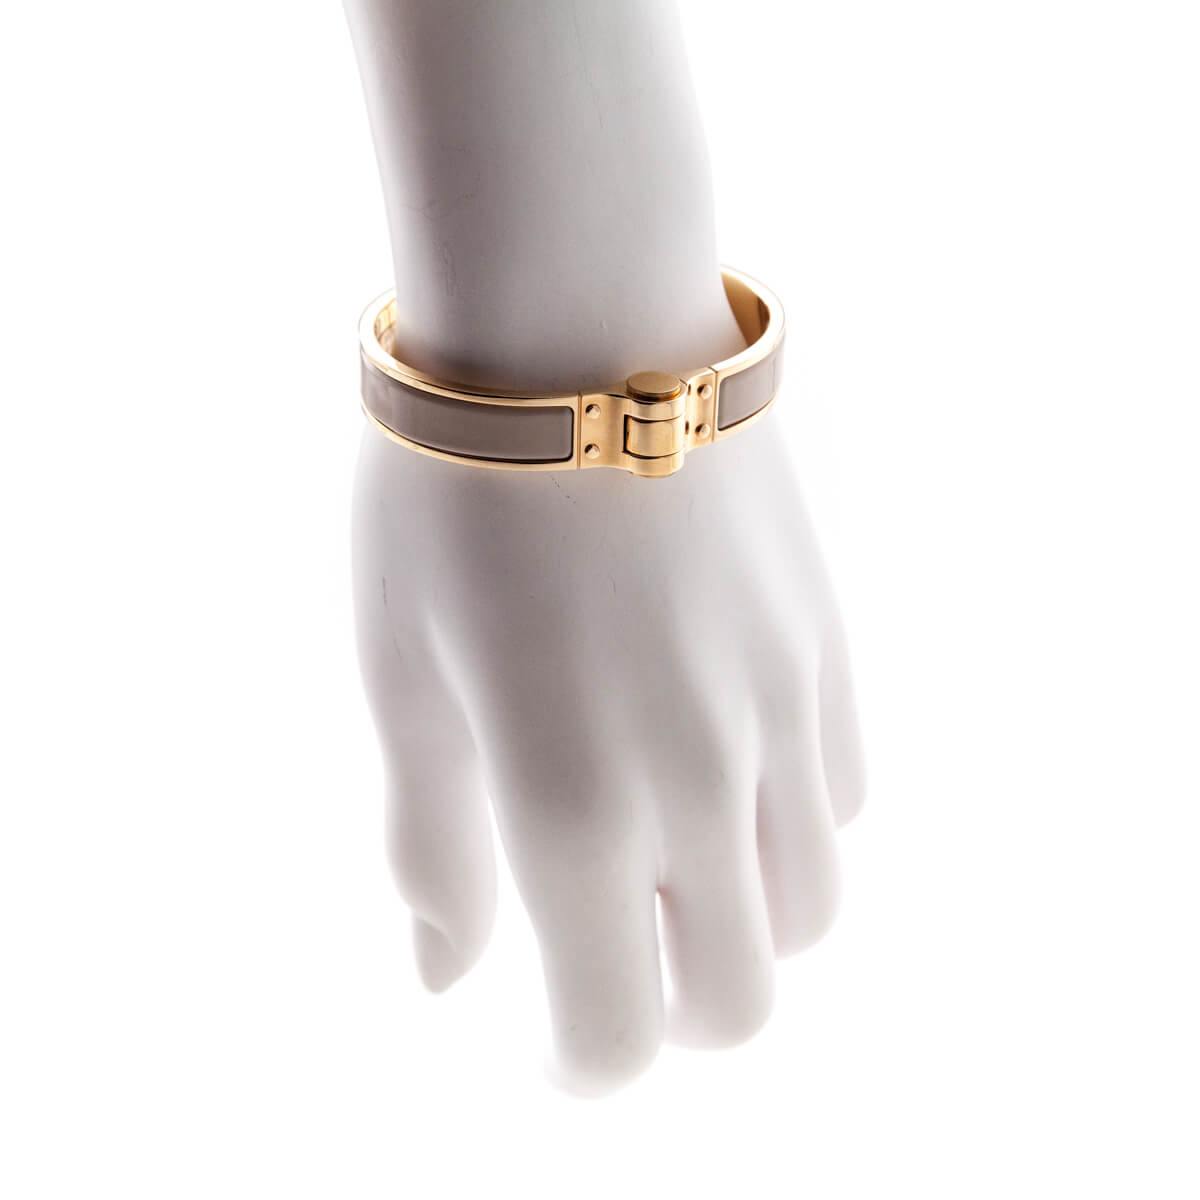 Hermes Rose Gold & Taupe Enamel Hinged Bracelet Size M - Love that Bag etc - Preowned Authentic Designer Handbags & Preloved Fashions